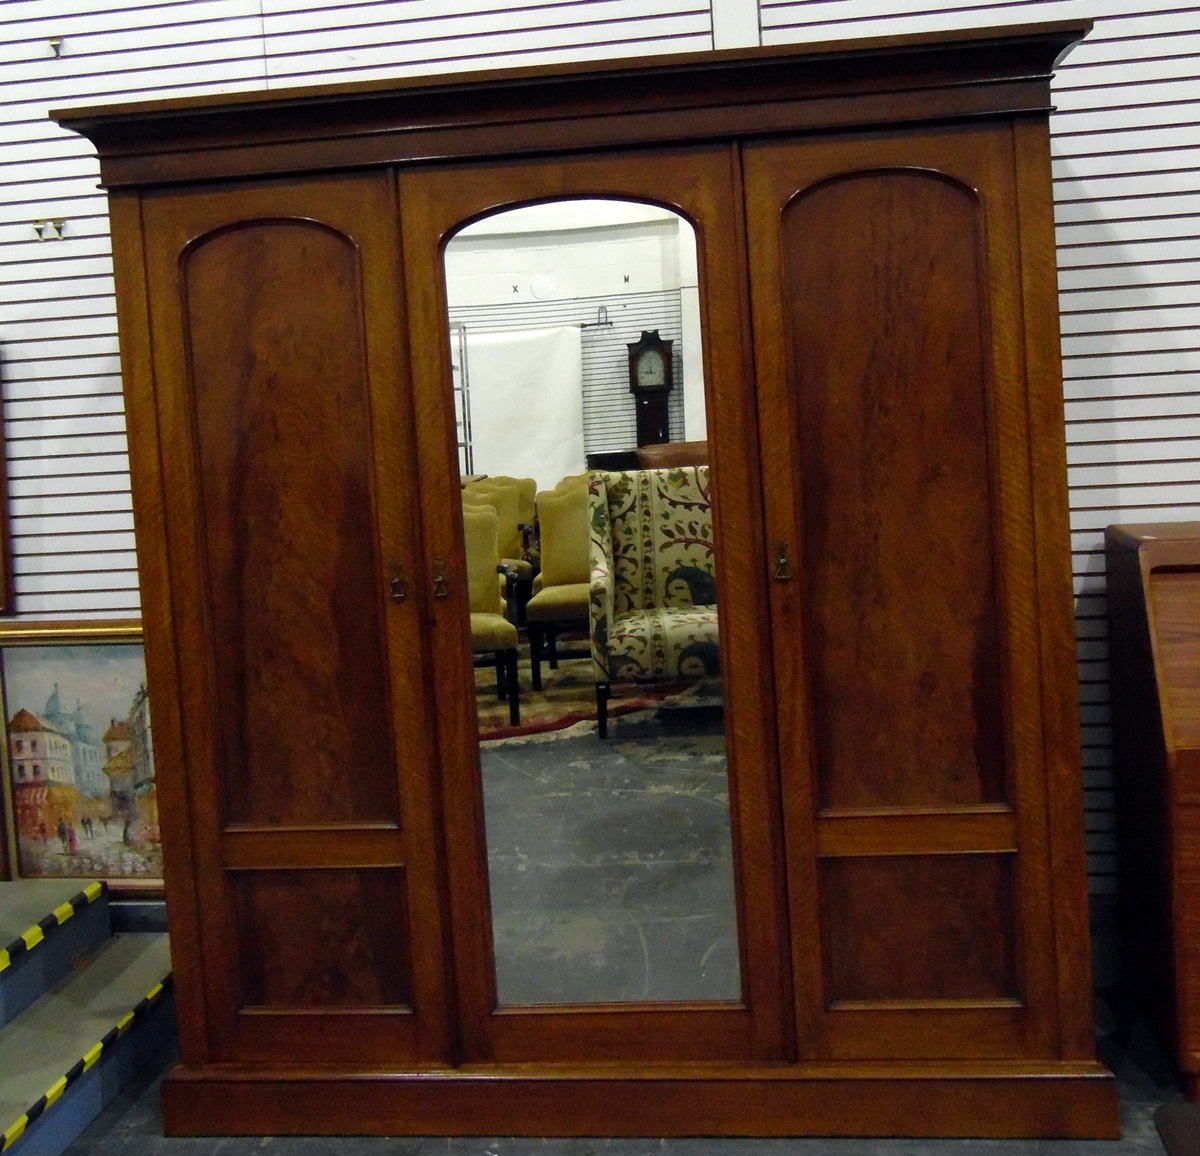 Victorian mahogany triple wardrobe with arched flame mahogany cross-banded panelled doors,